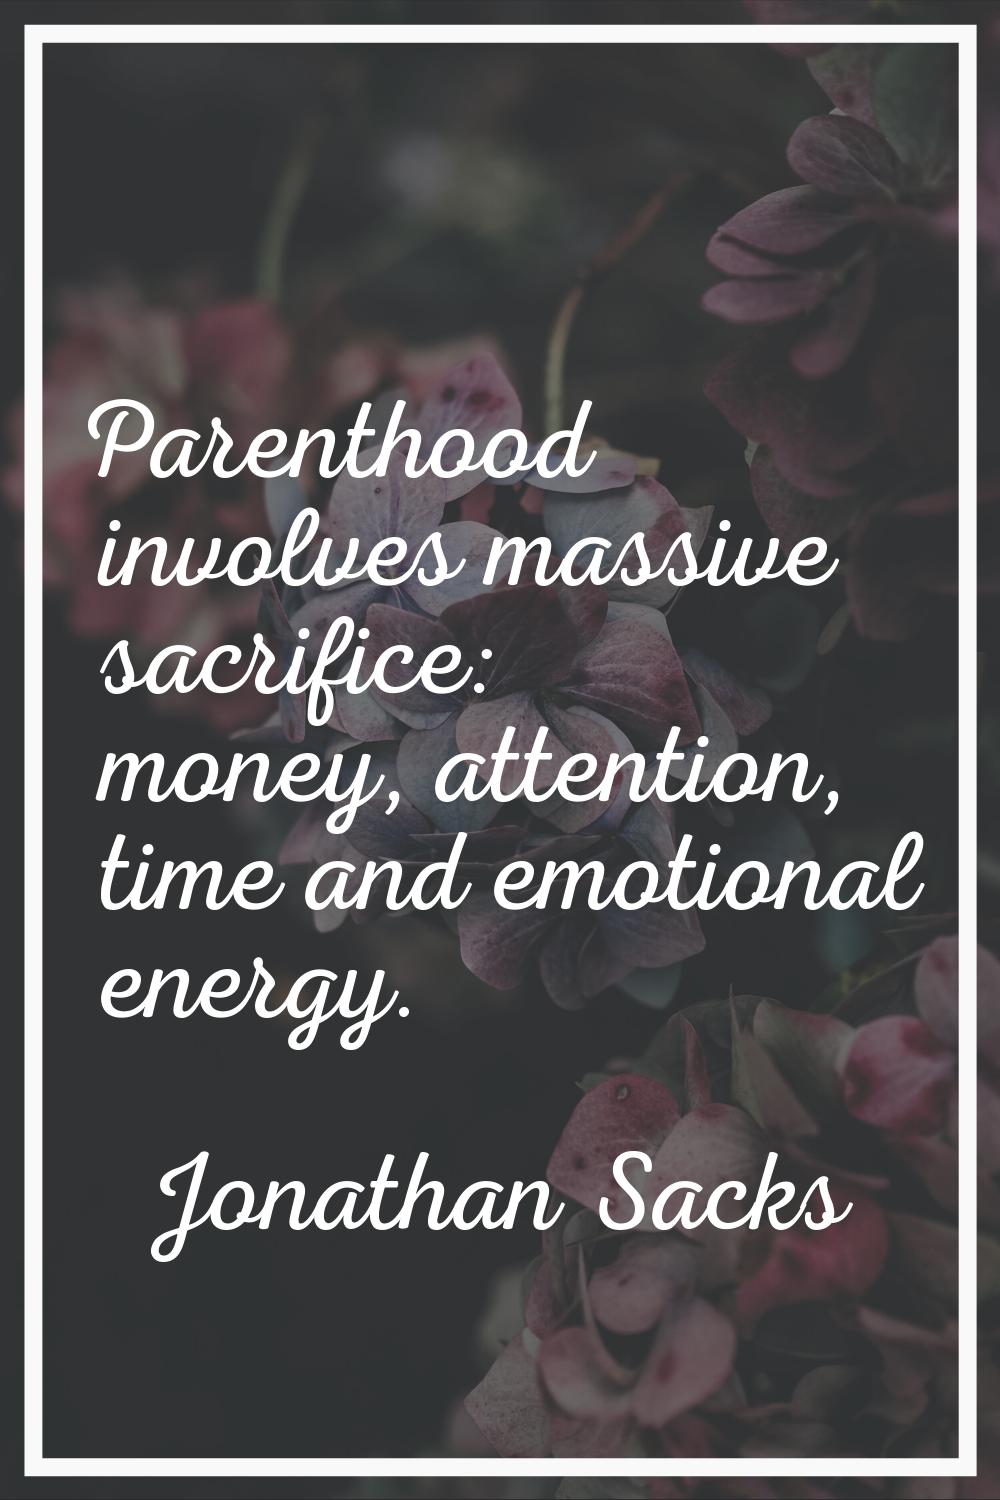 Parenthood involves massive sacrifice: money, attention, time and emotional energy.